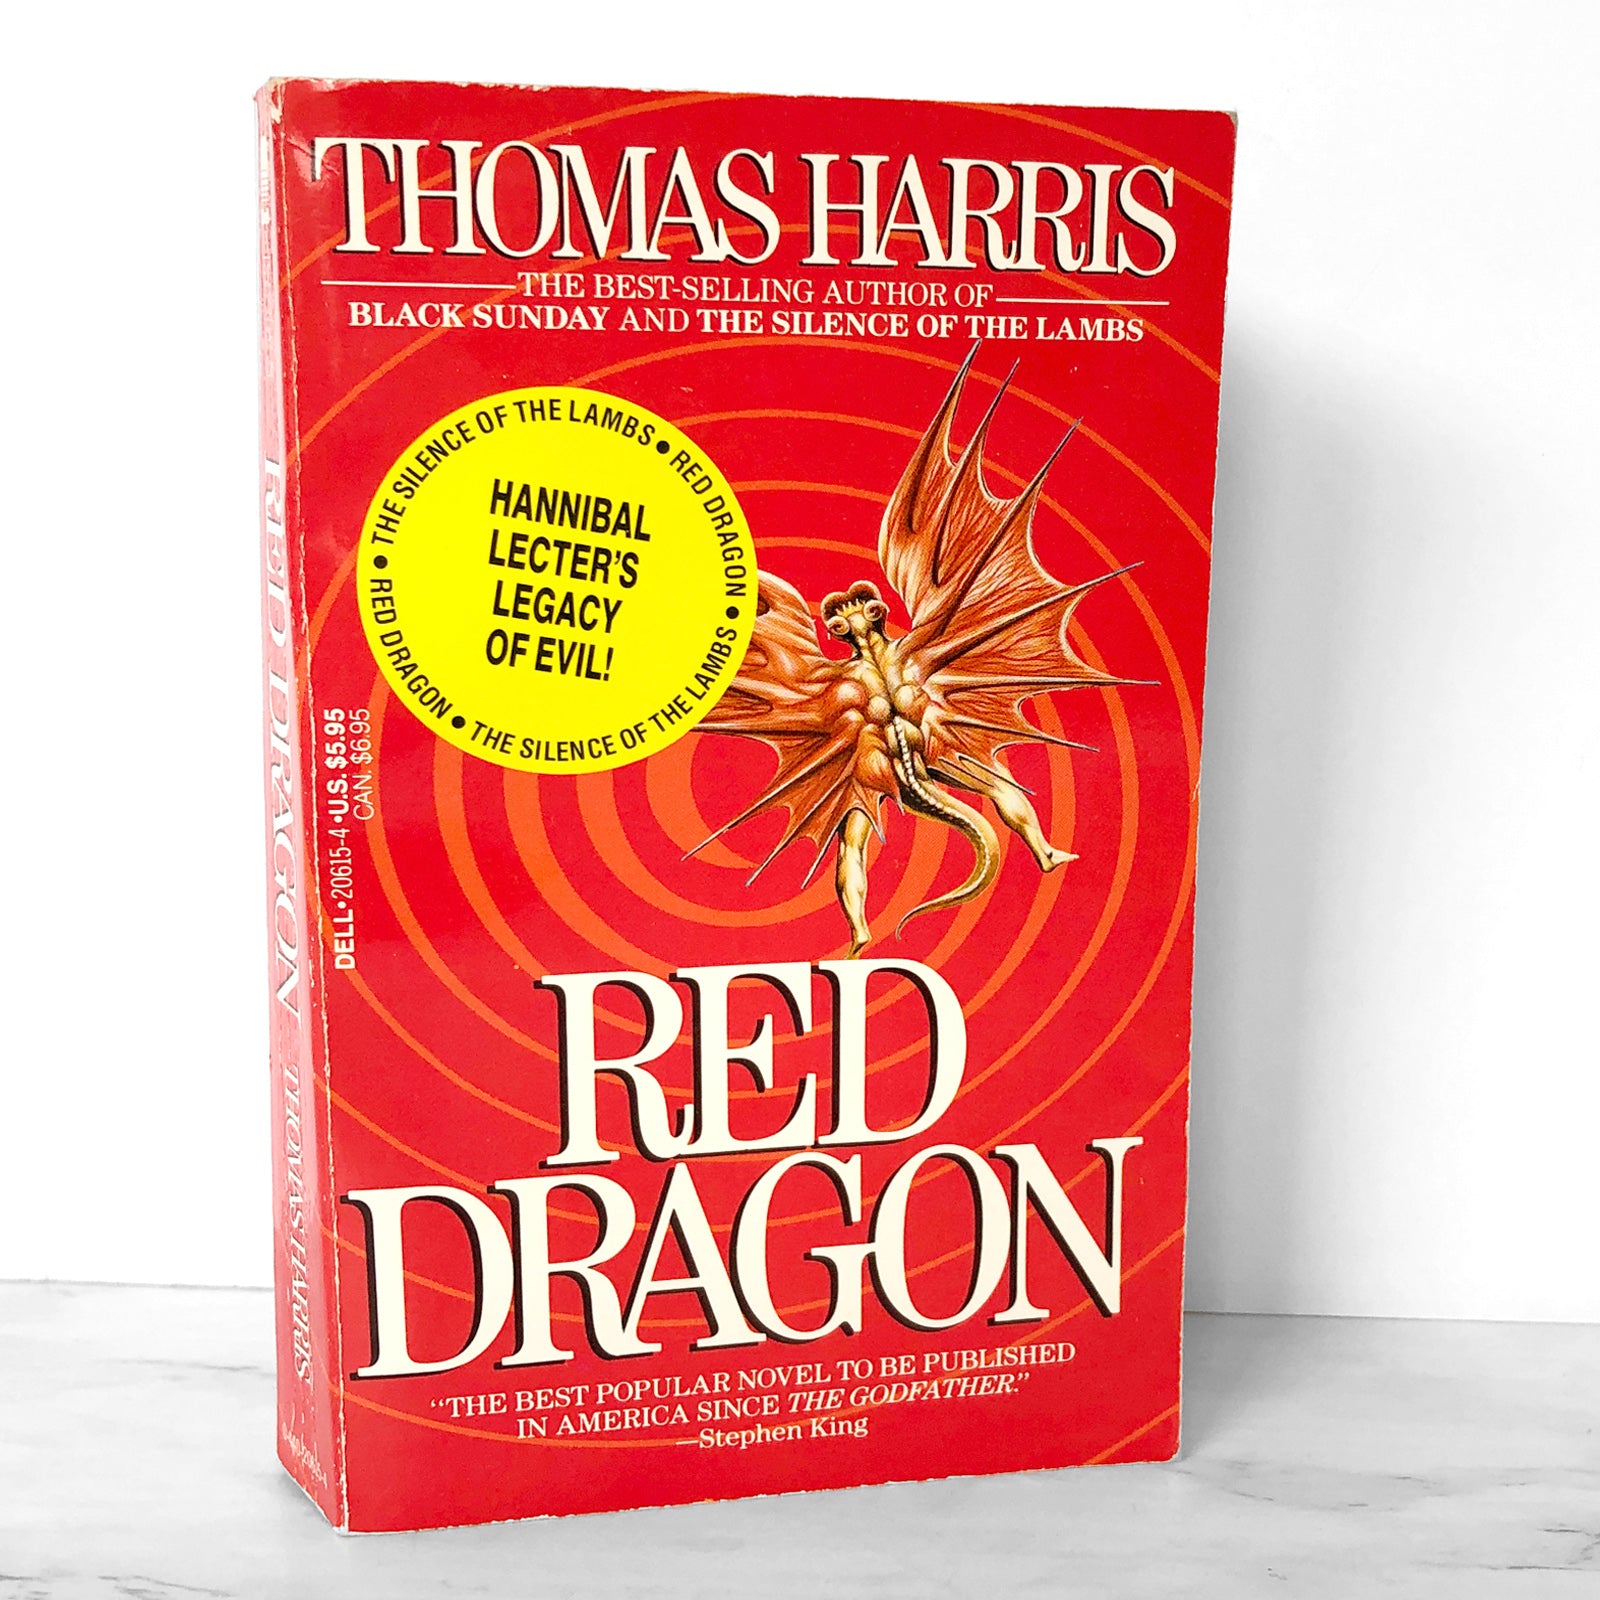 Dragon by Thomas Harris [1990 PAPERBACK]